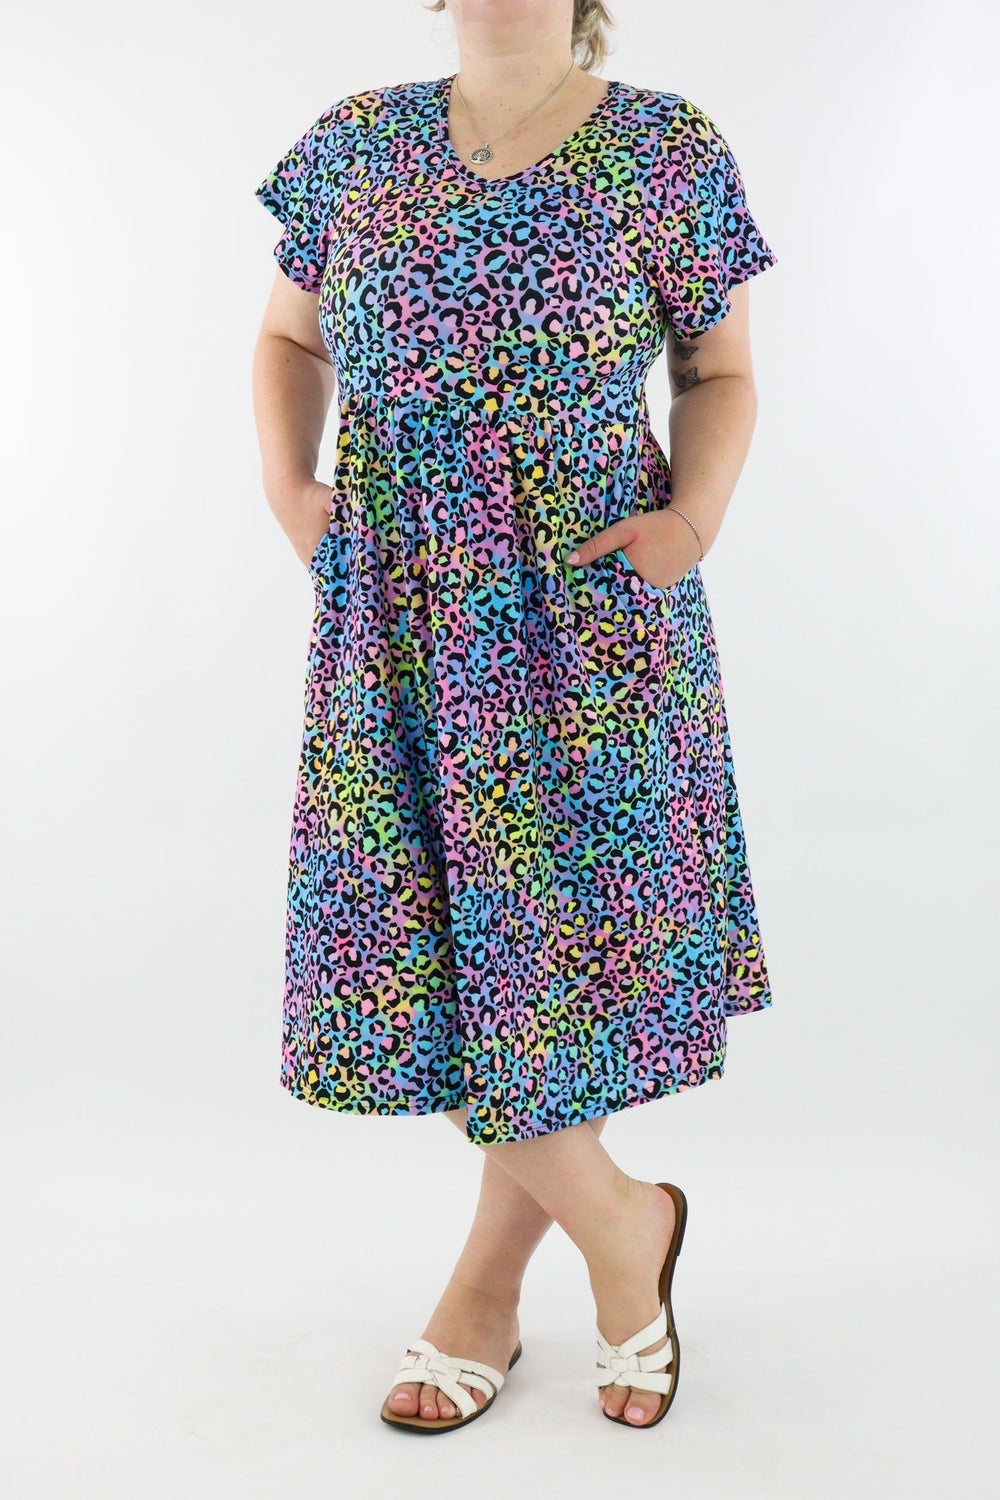 Vivid Leopard - A-Line Dress - Midi Length - Side Pockets - Pawlie